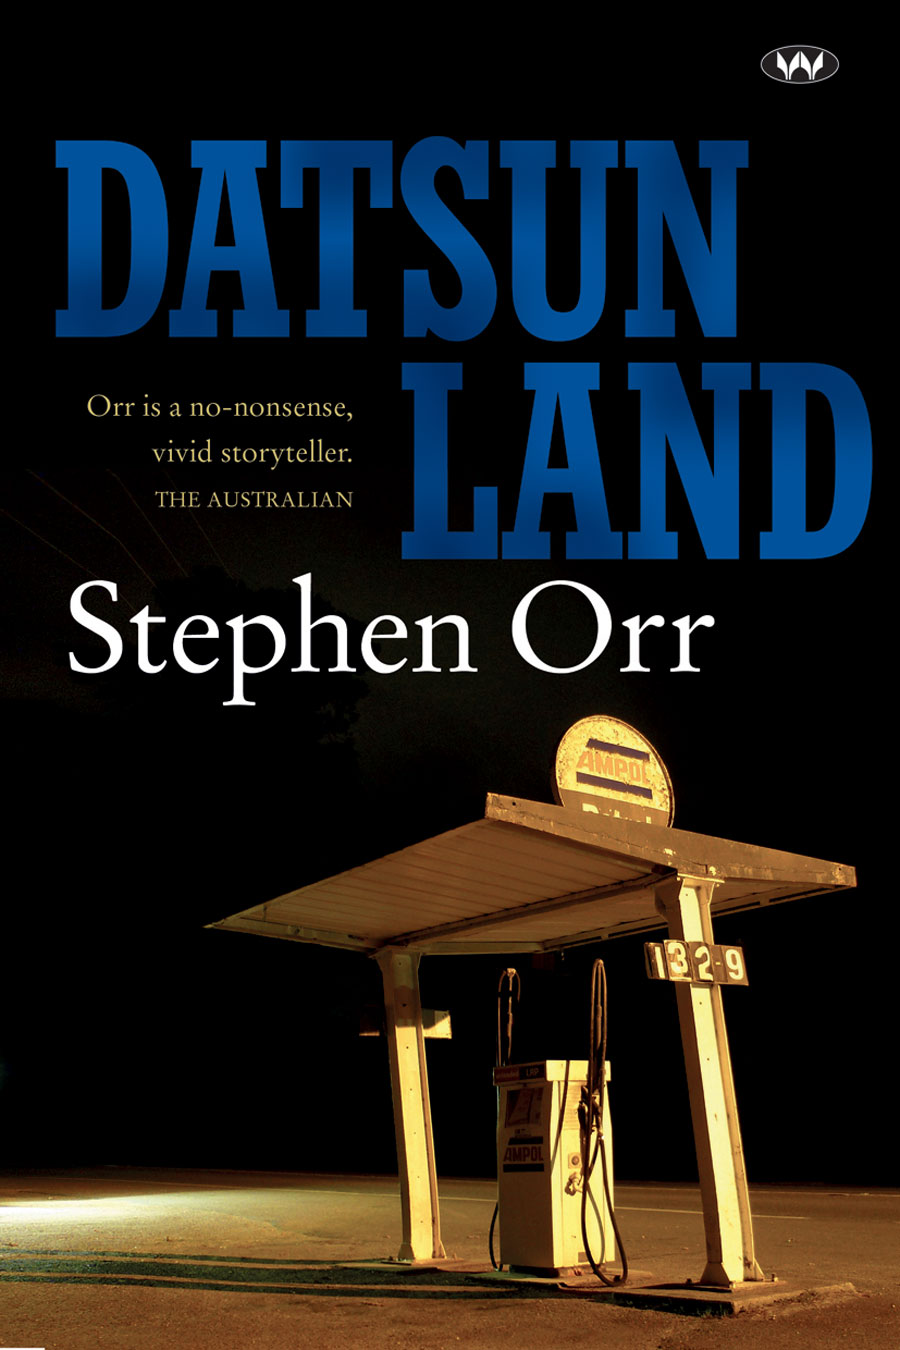 Datsunland-book-cover---Stephen-Orr